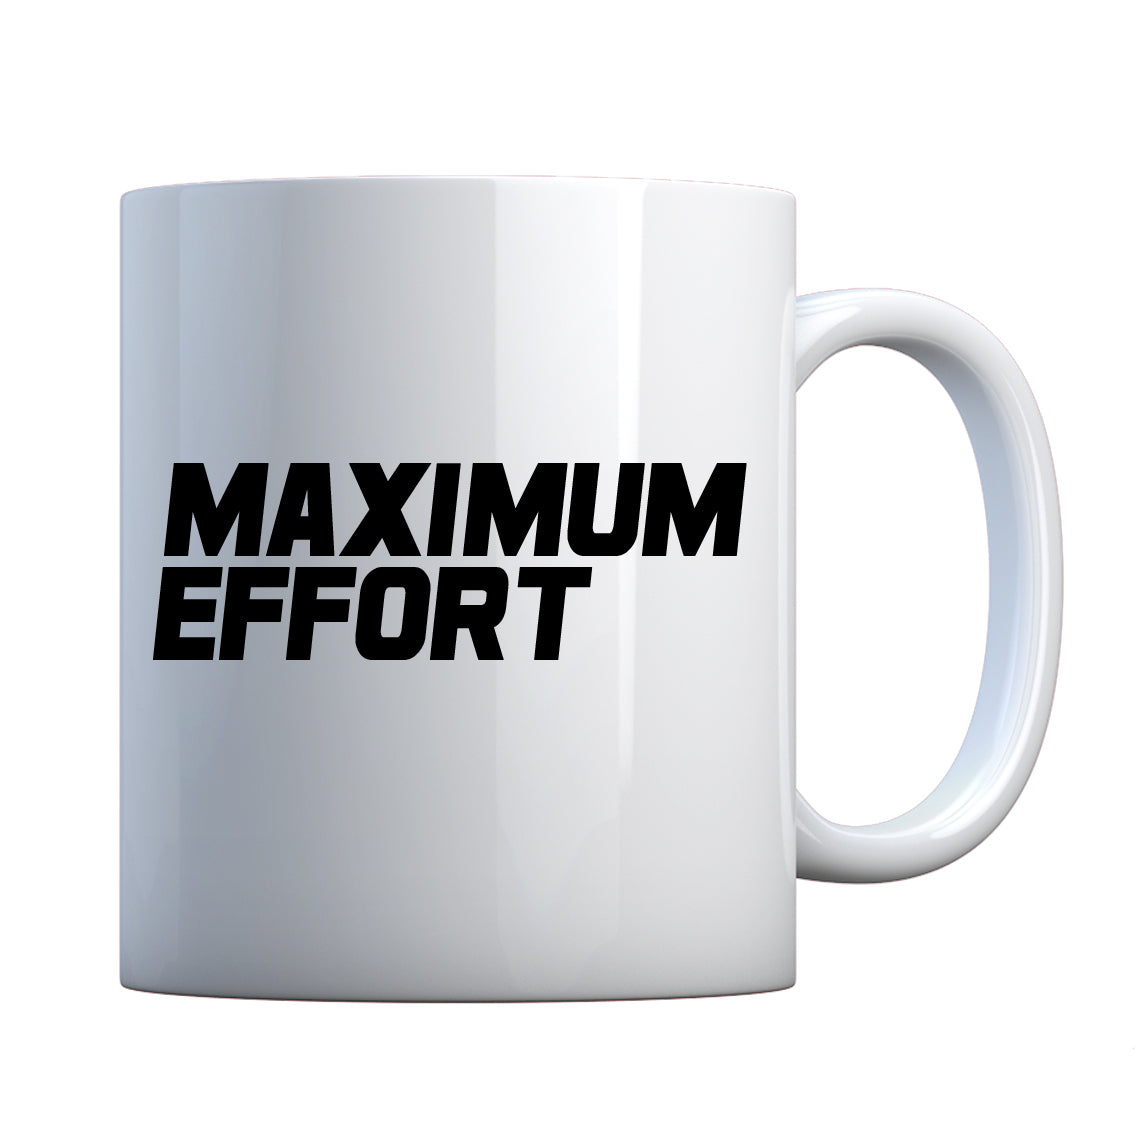 Mug Maximum Effort Ceramic Gift Mug